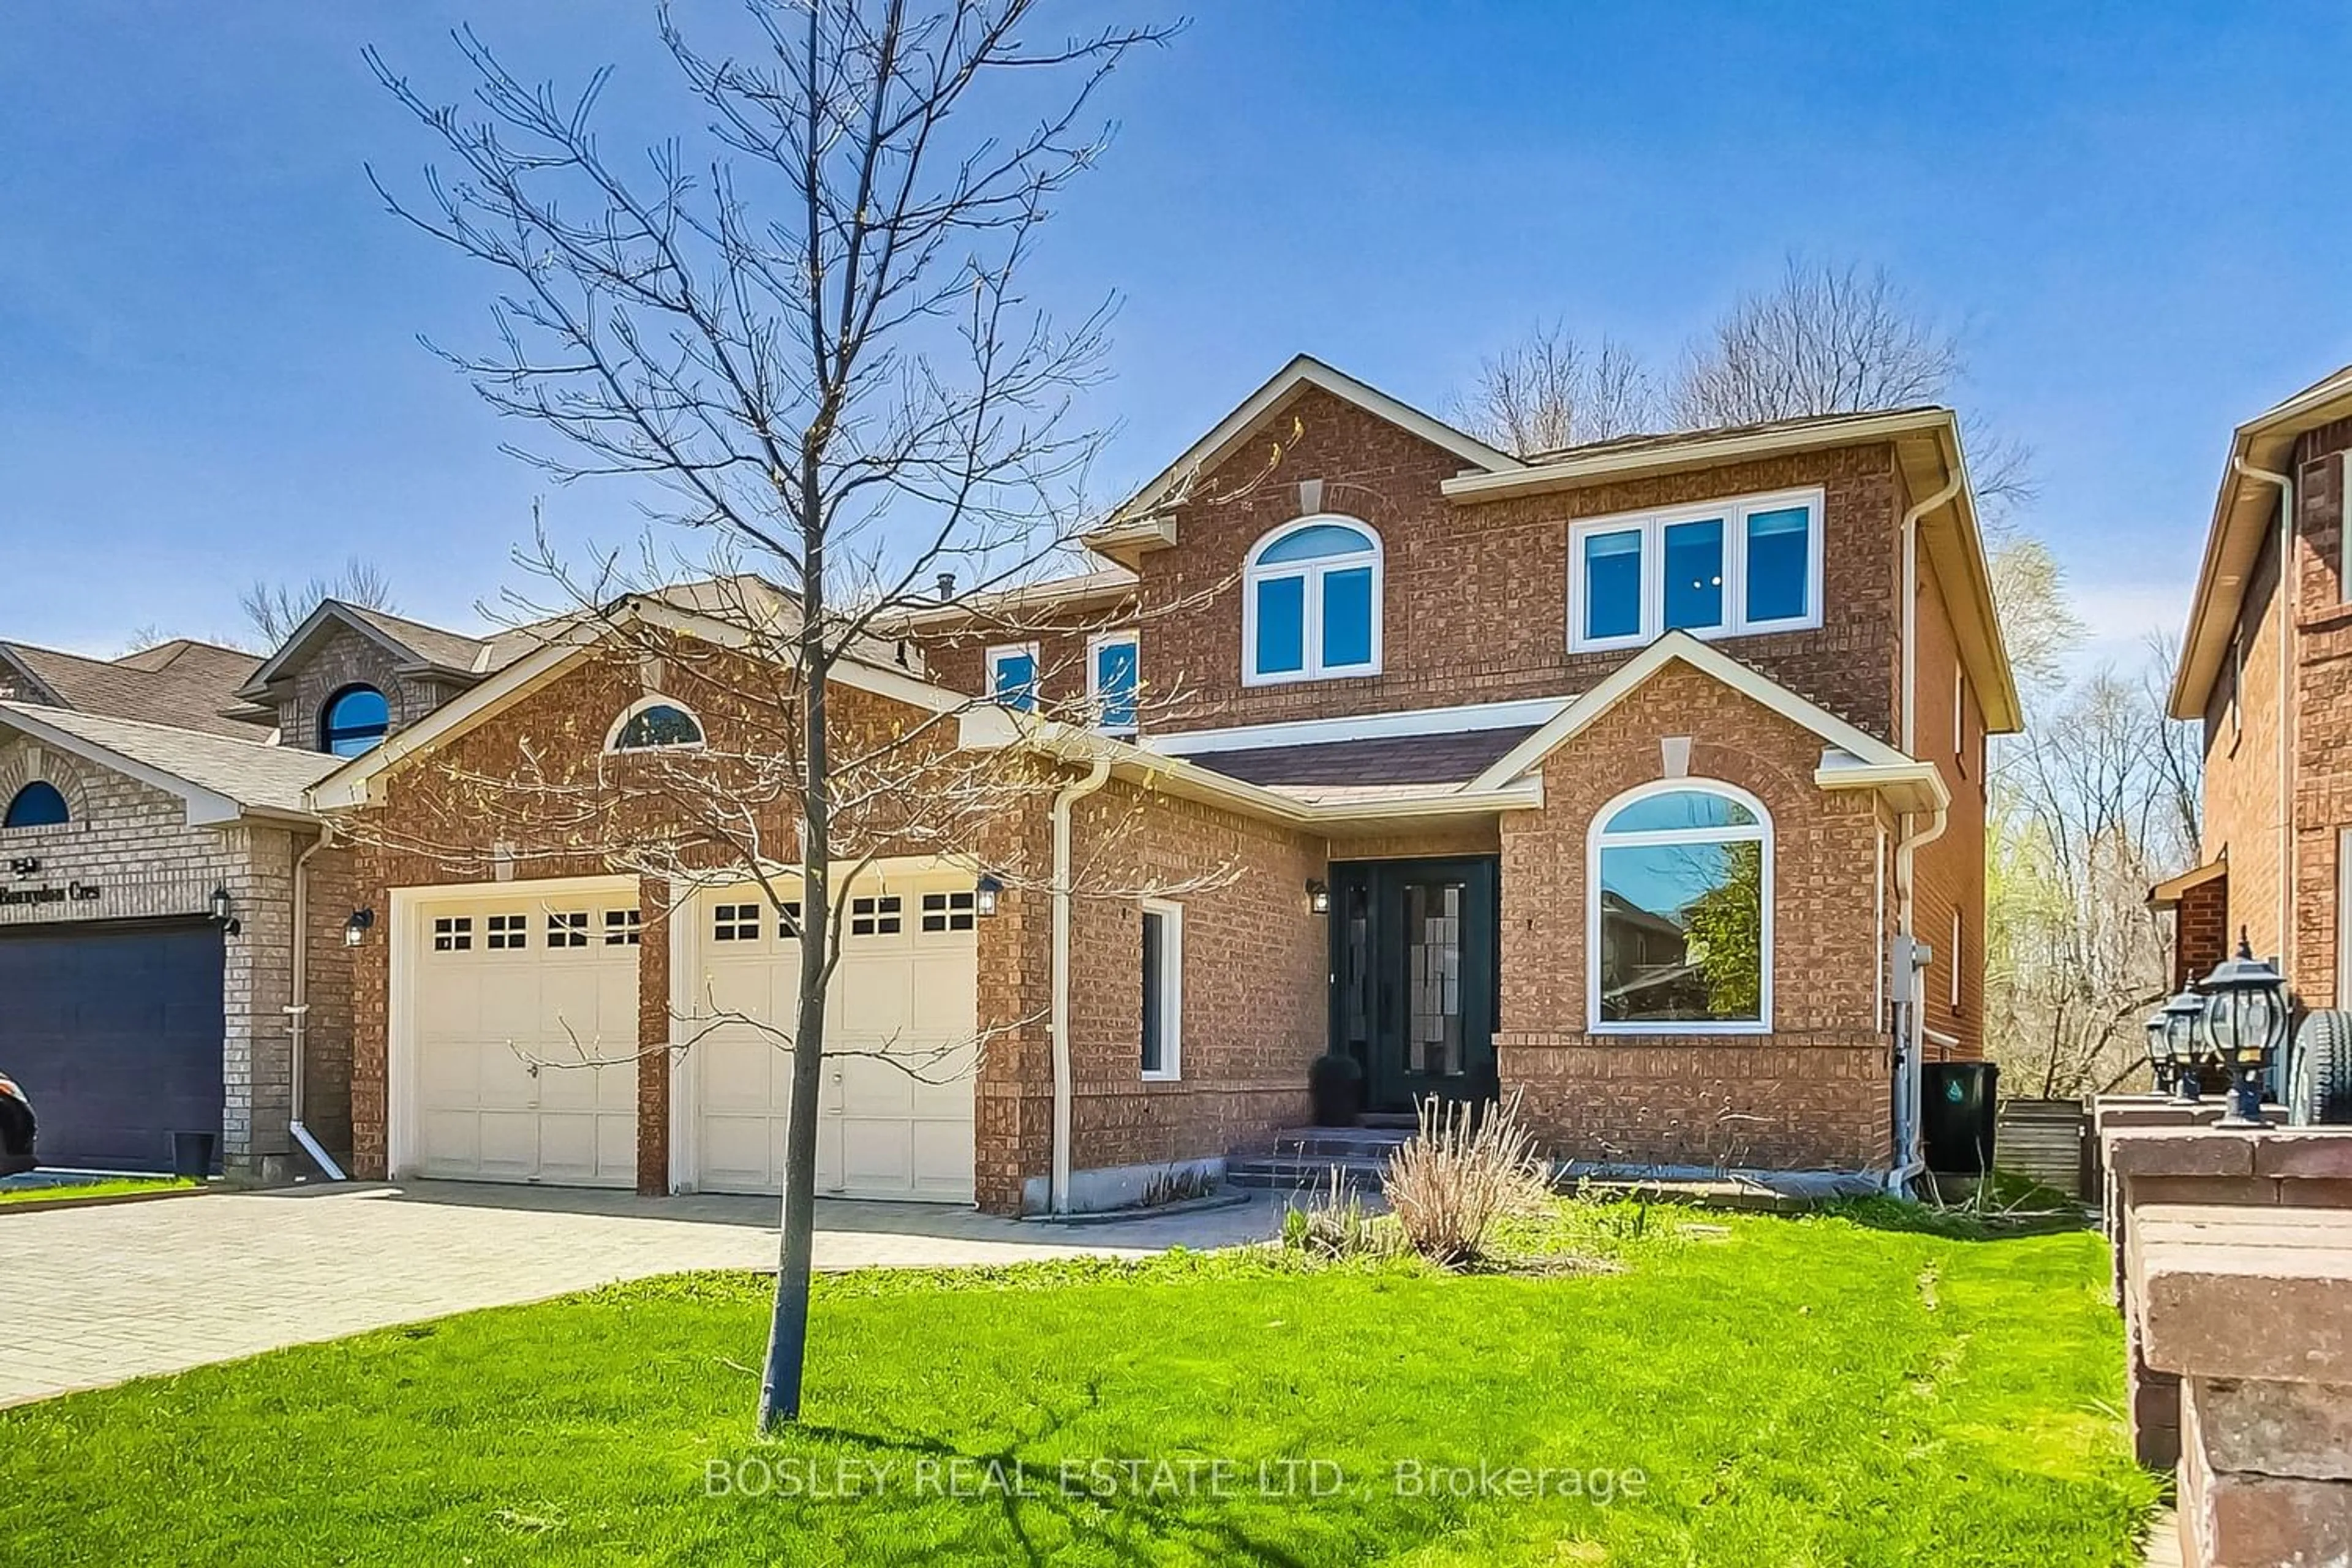 Home with brick exterior material for 59 Bonnydon Cres, Toronto Ontario M1B 5X2